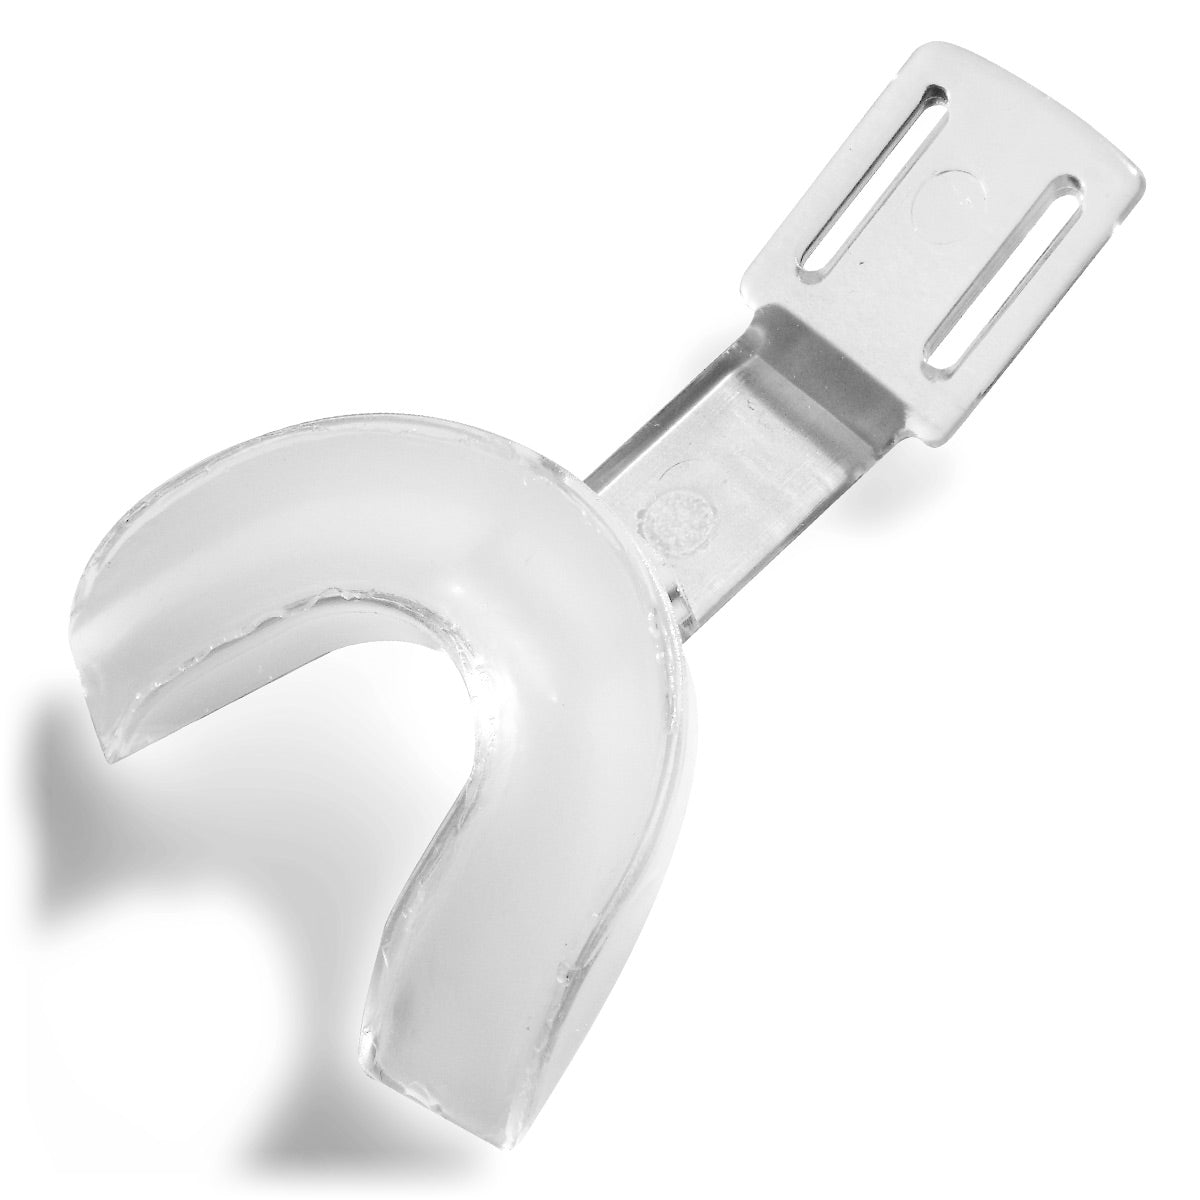 Standard Boil 'n Bite Mouthpiece for CPAP PRO & ApneaPAP CPAP/BiPAP Masks